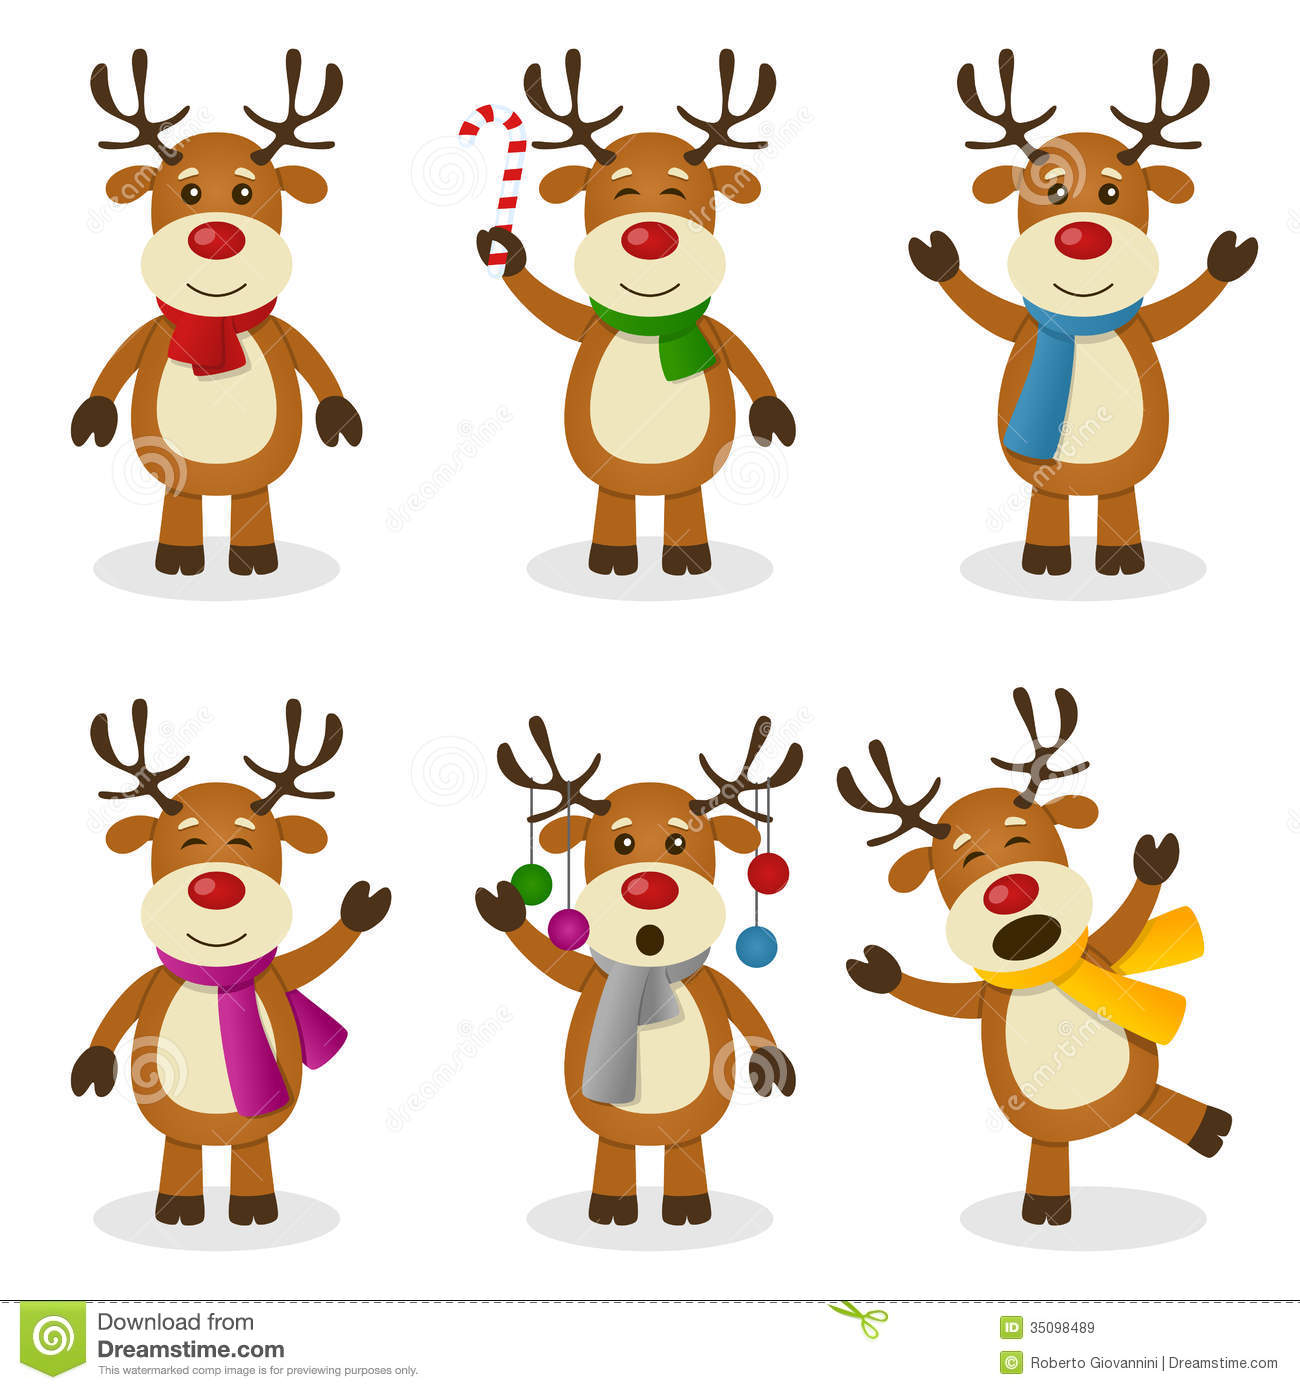 Reindeer Cartoon Christmas Set Royalty Free Stock Images   Image